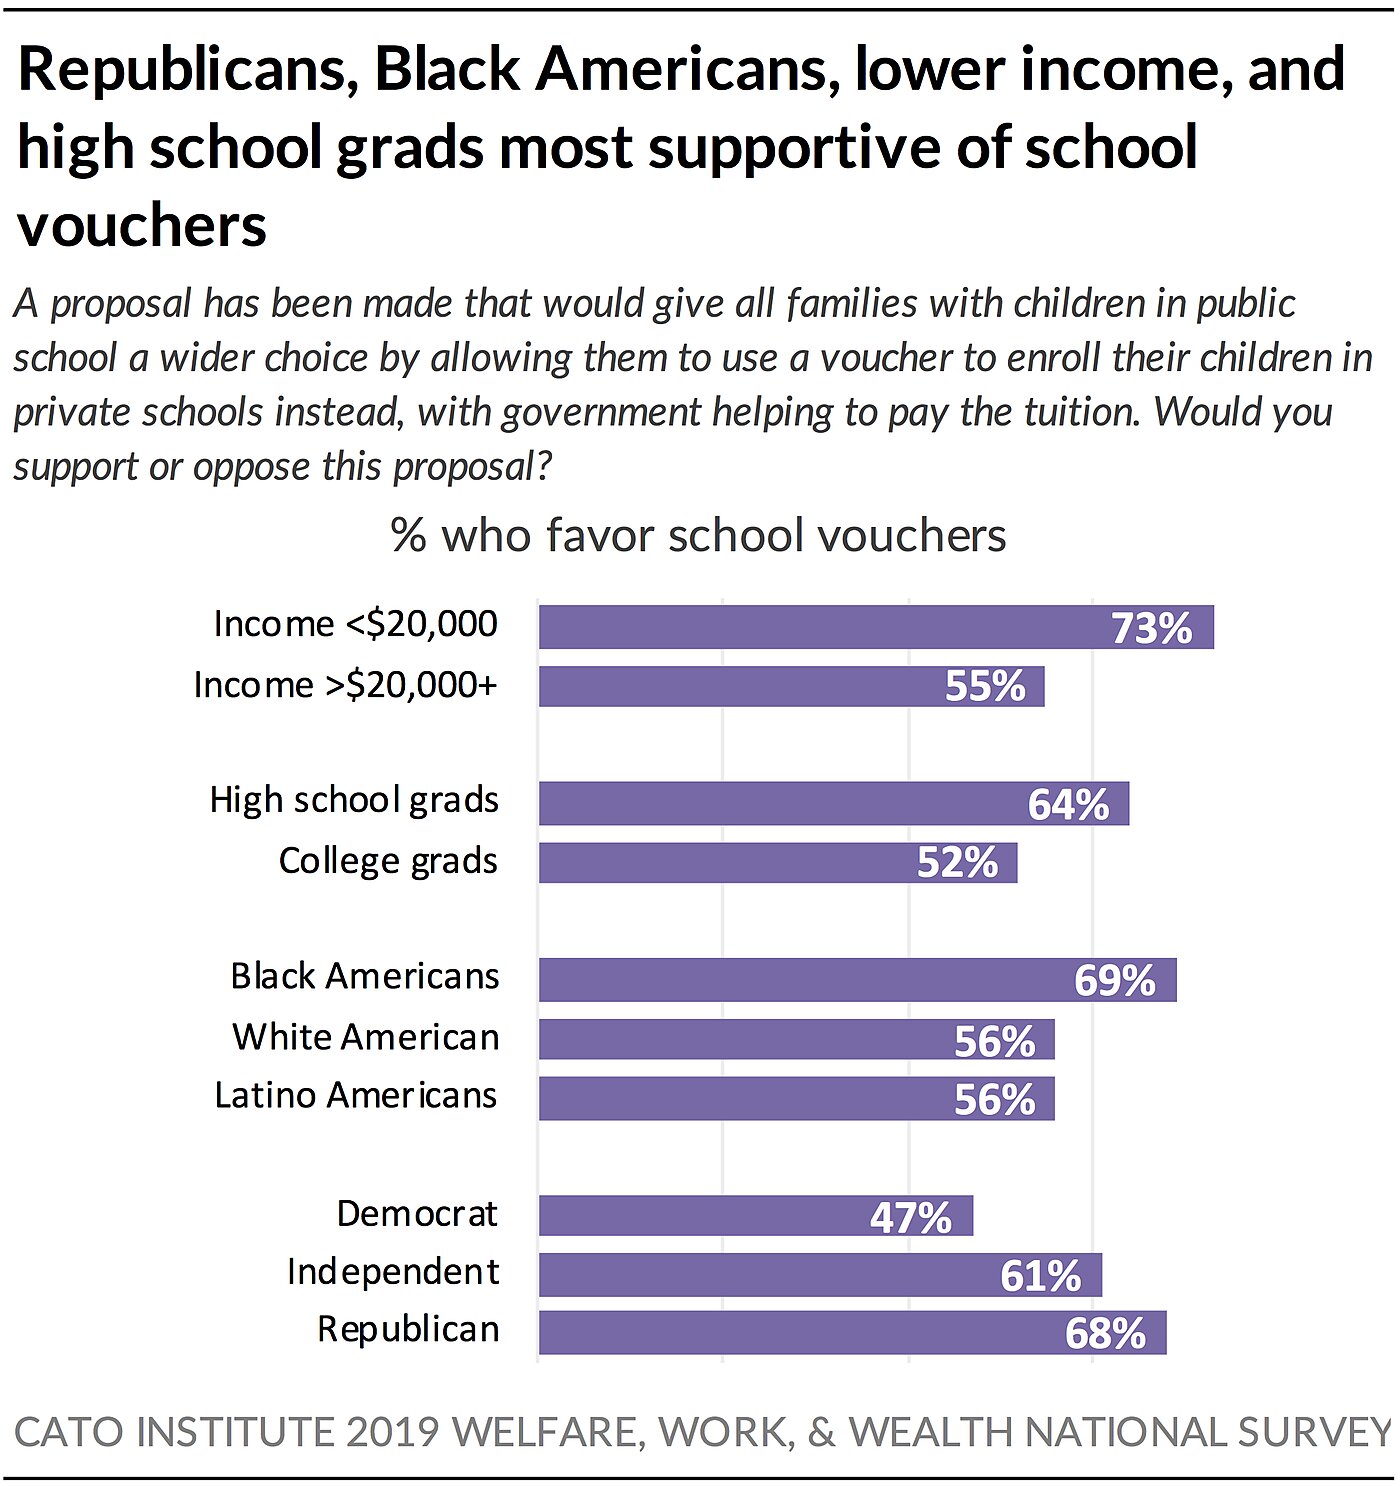 Republicans, Black Americans, lower income, high school grads and vouchers